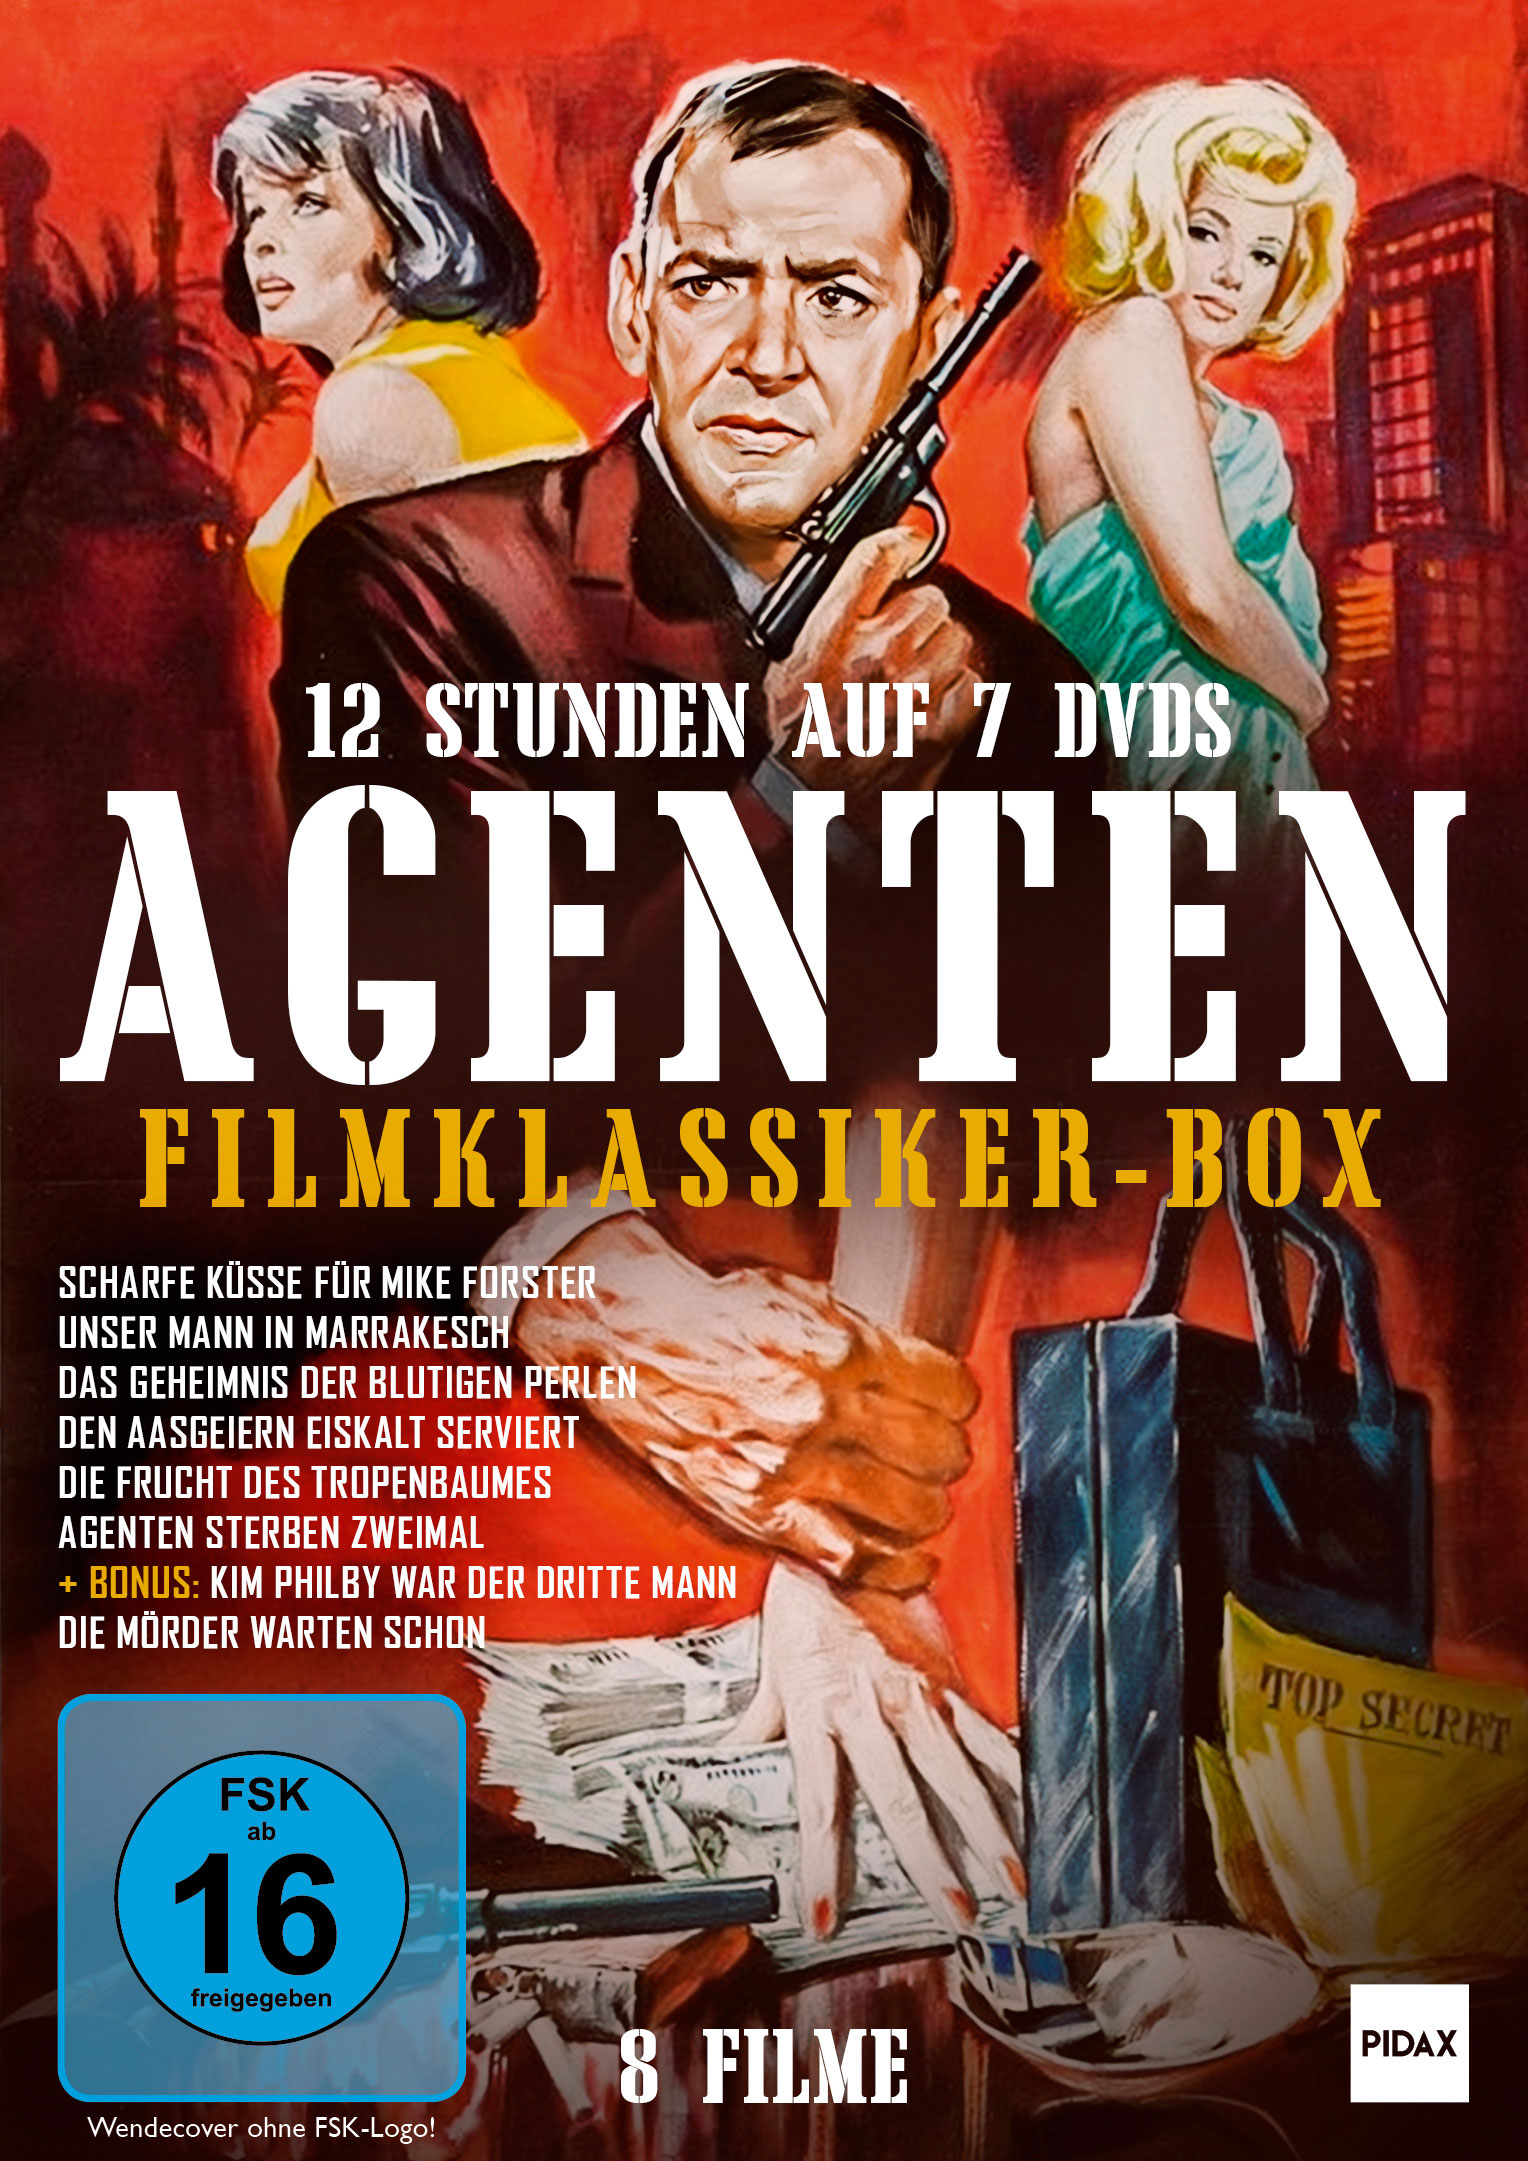 Agenten Filmklassiker-Box